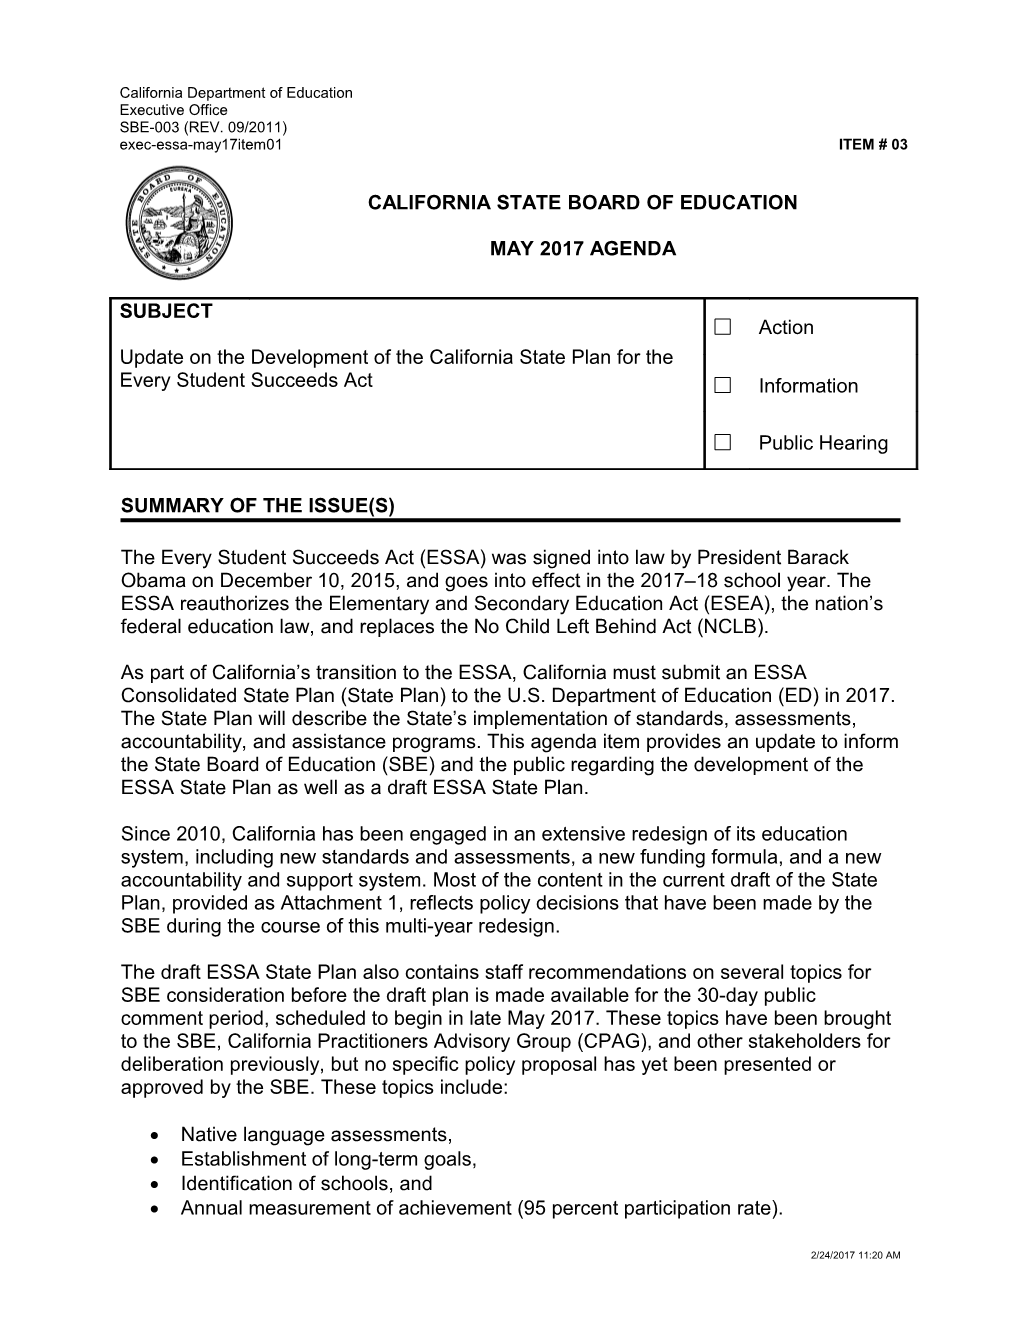 May 2017 Agenda Item 03 - Meeting Agendas (CA State Board of Education)